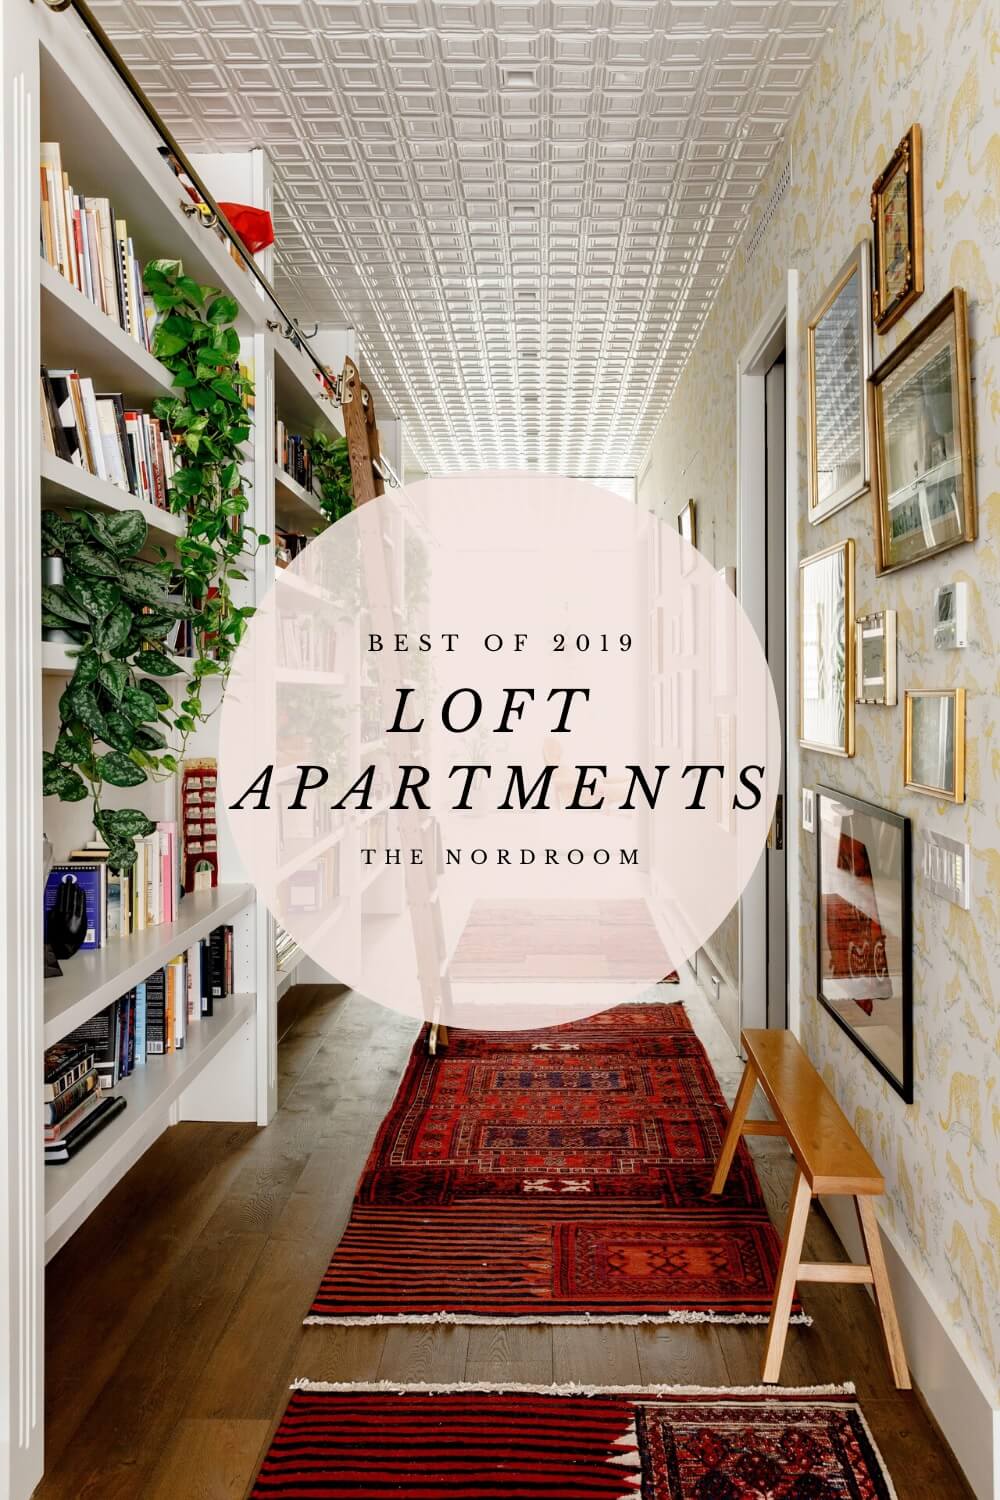 Best of 2019: Loft Apartments